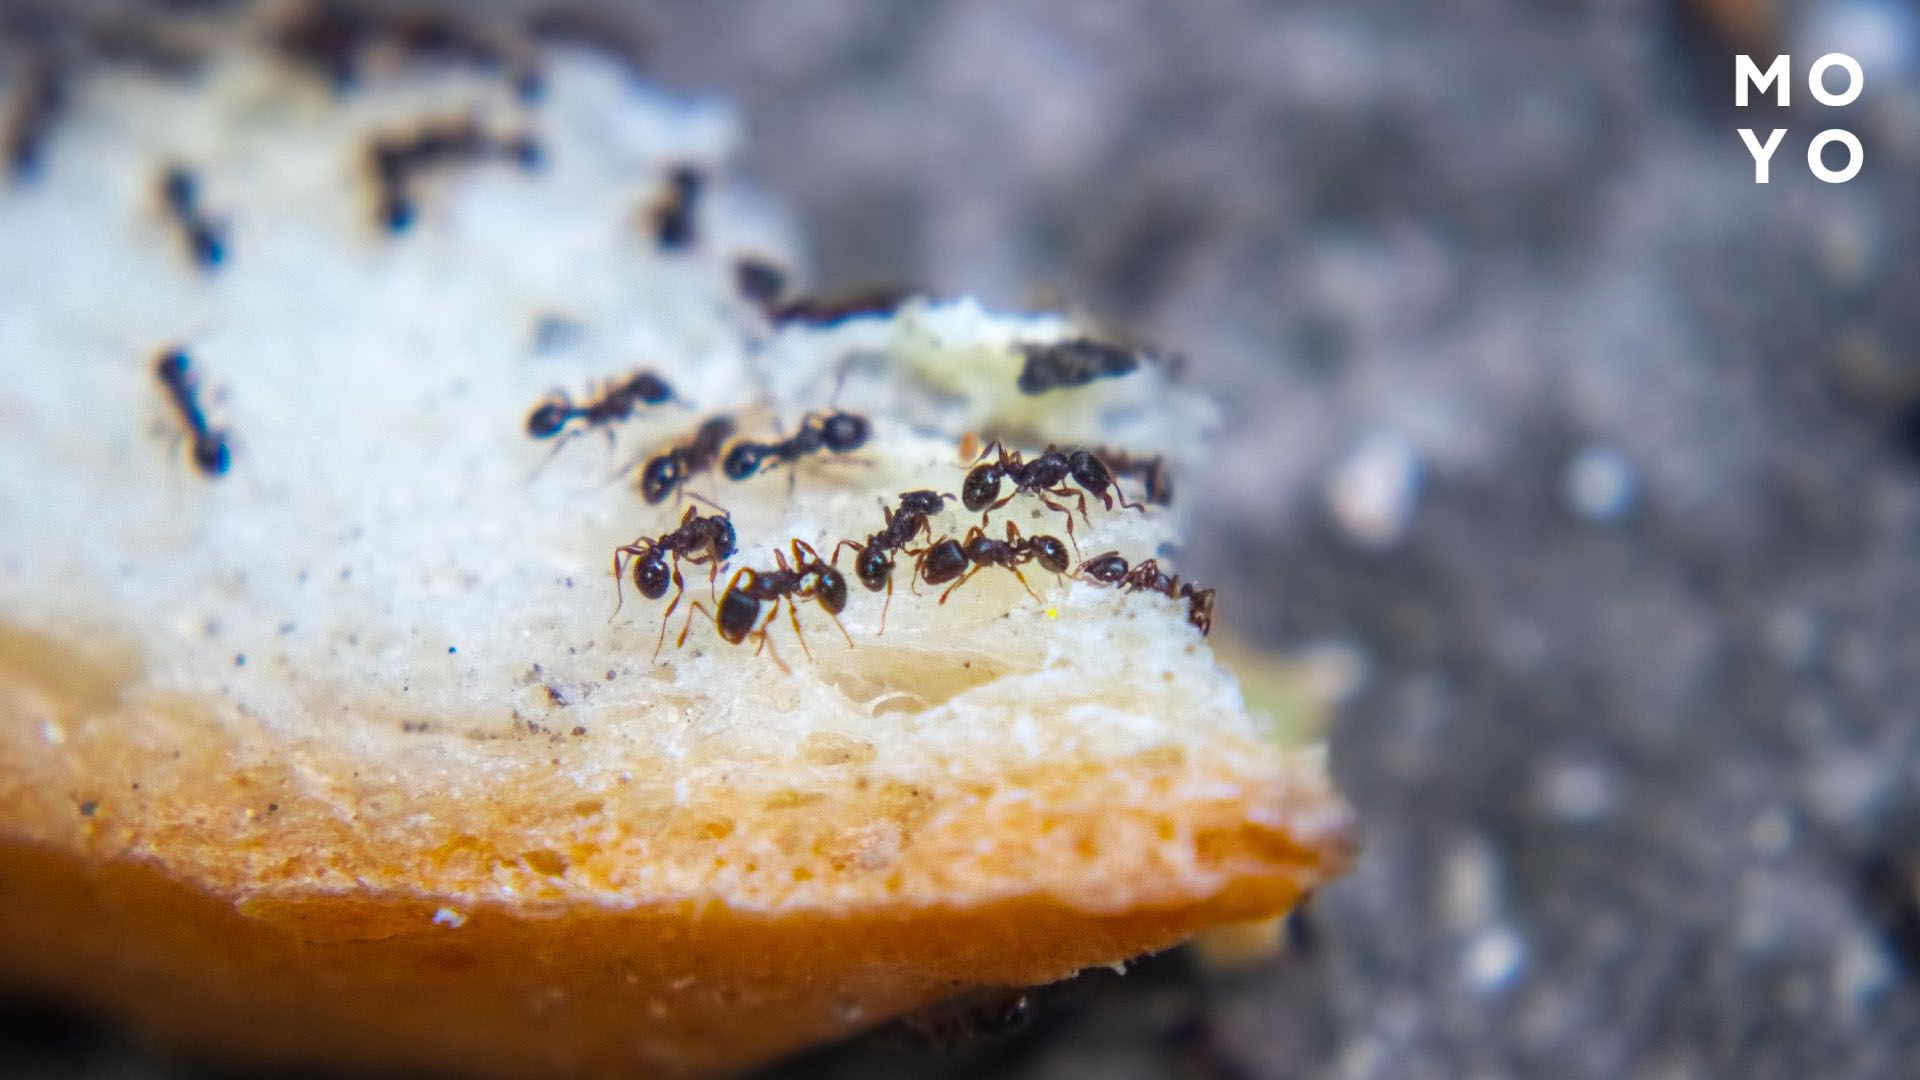 муравьи поедают сахар